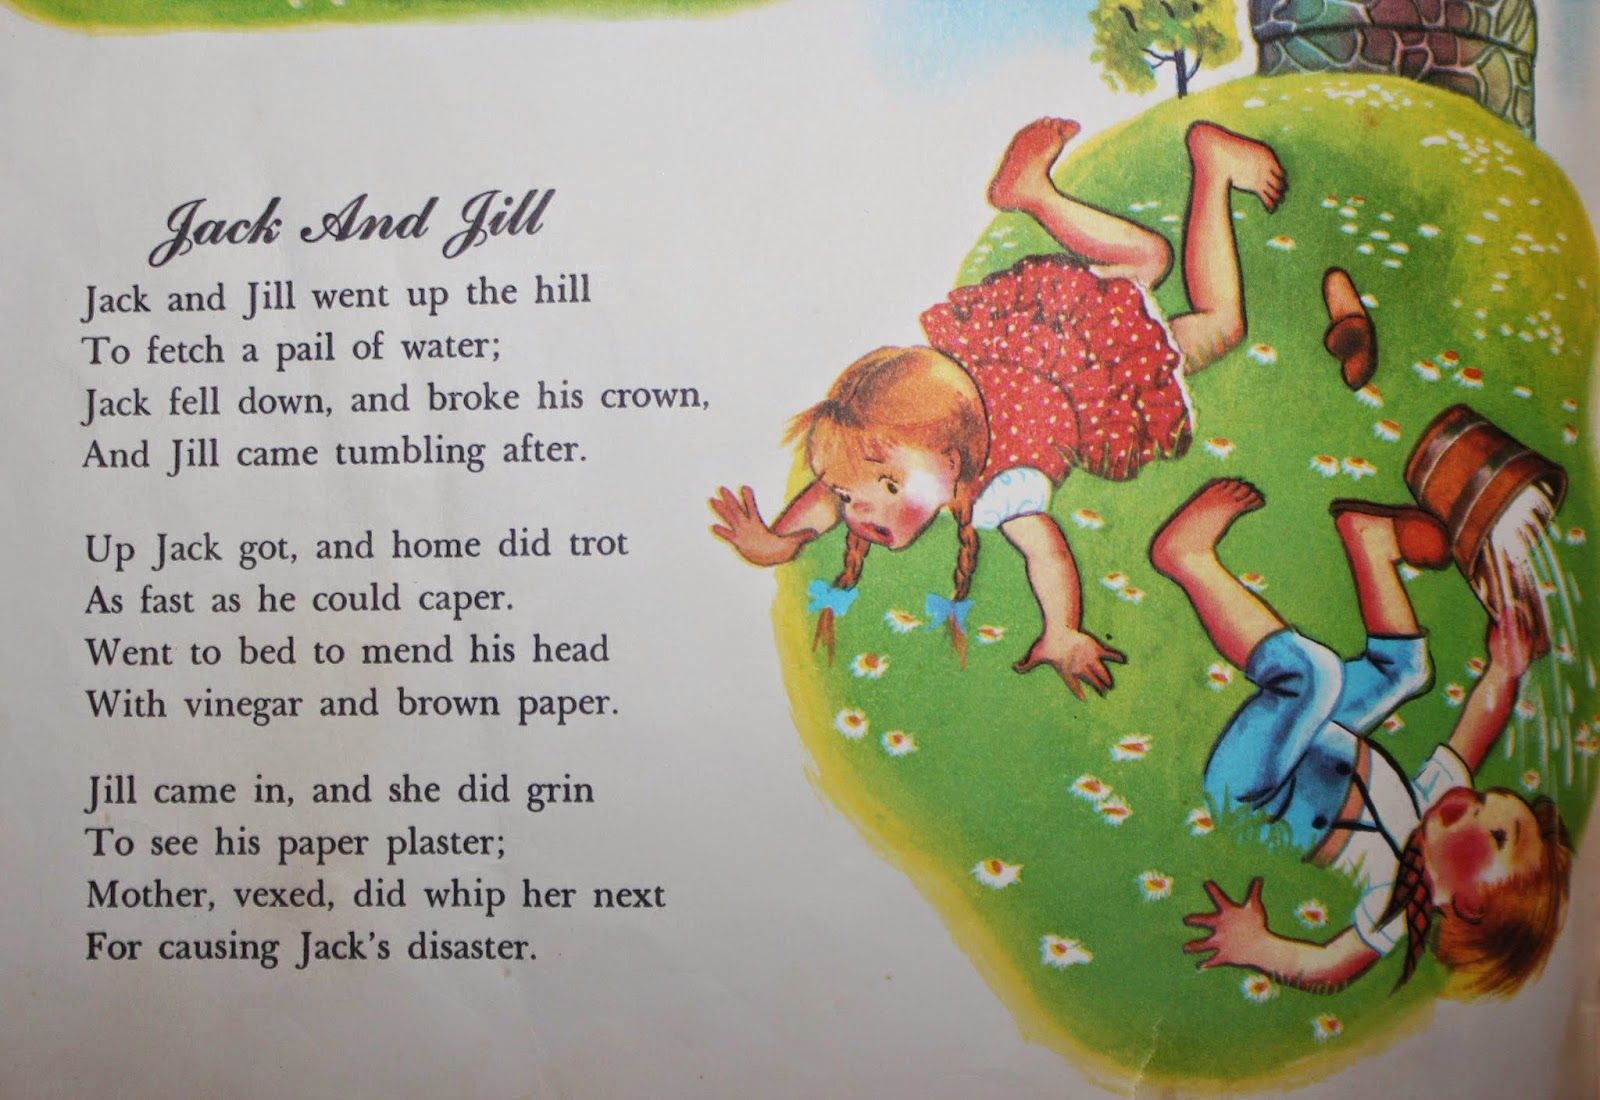 Jack and Jill tumbling down